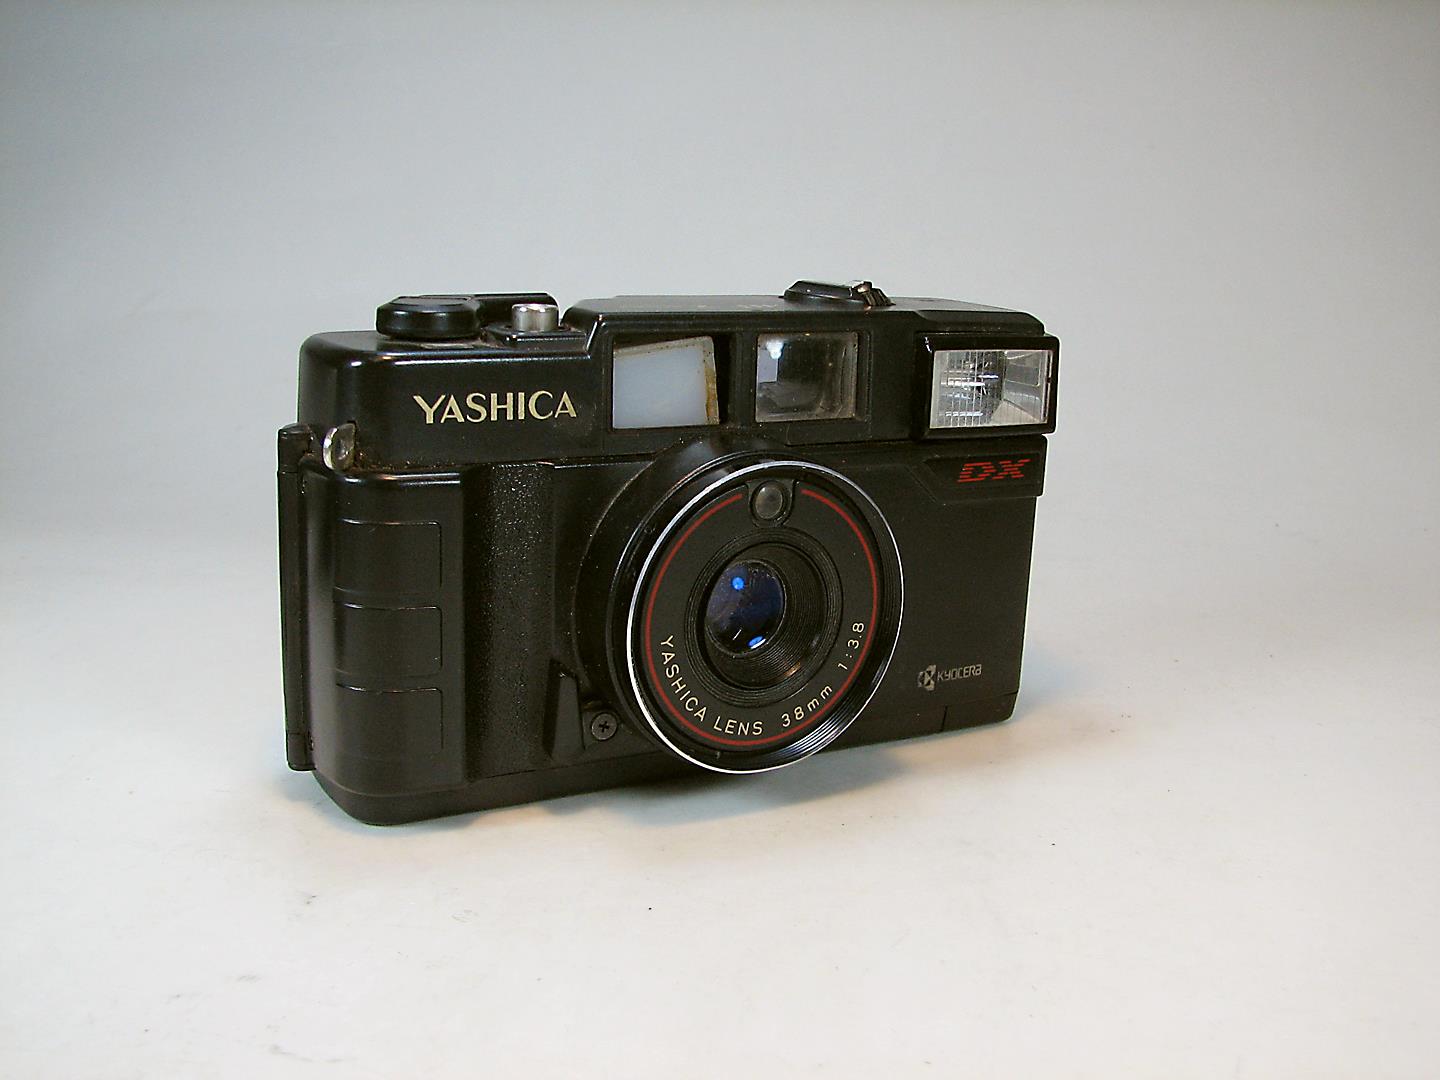 دوربین یاشیکا YASHICA MF-2 DX 